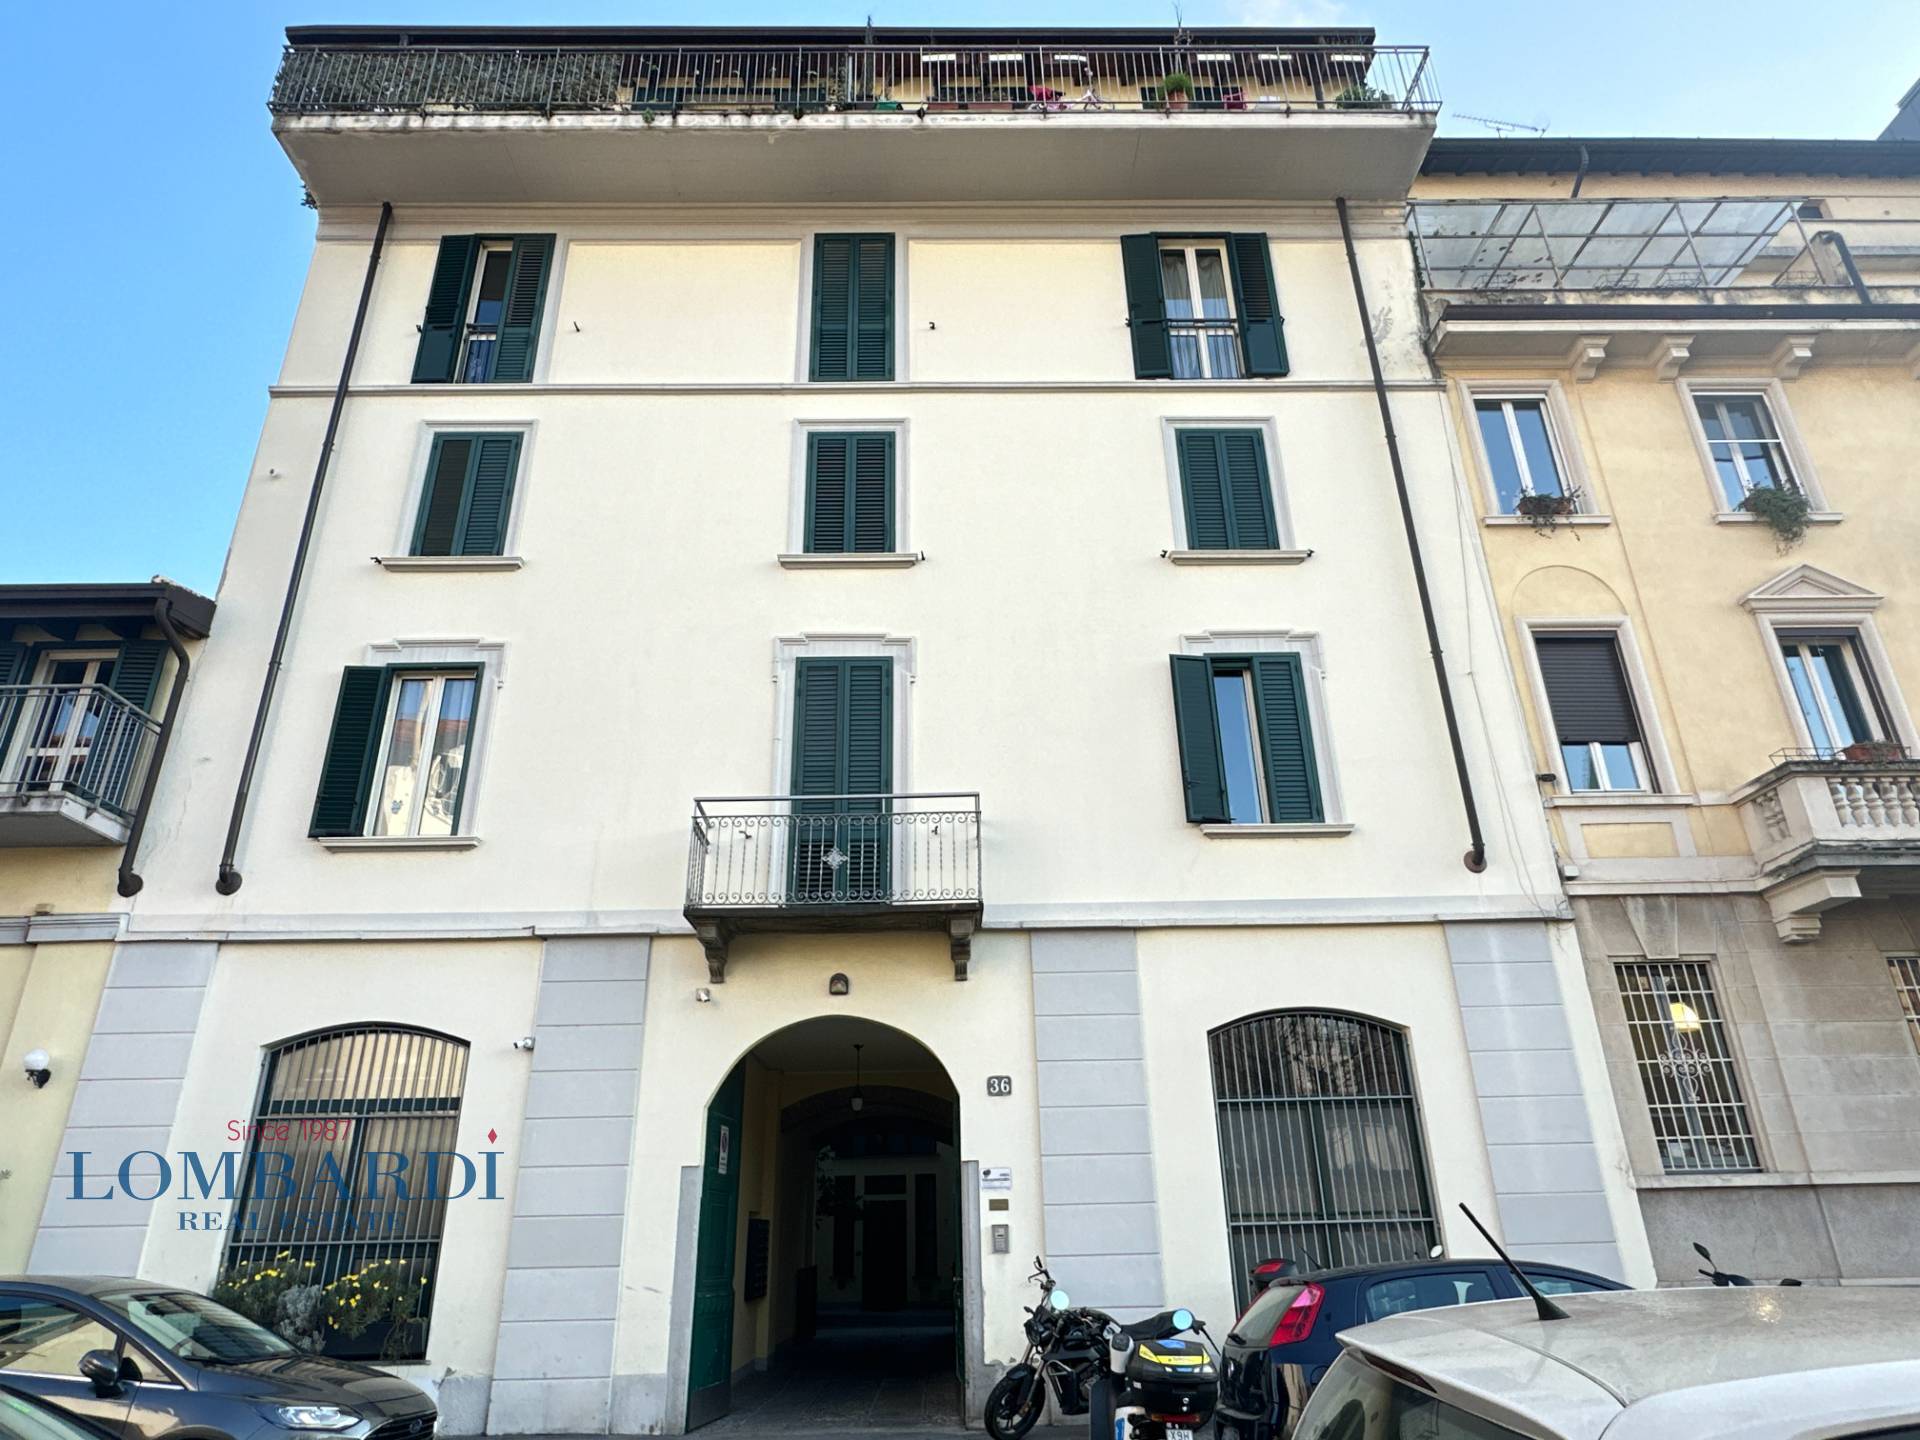 Loft arredato in affitto, Milano * monumentale, lagosta, staz.garibaldi, sarpi, far